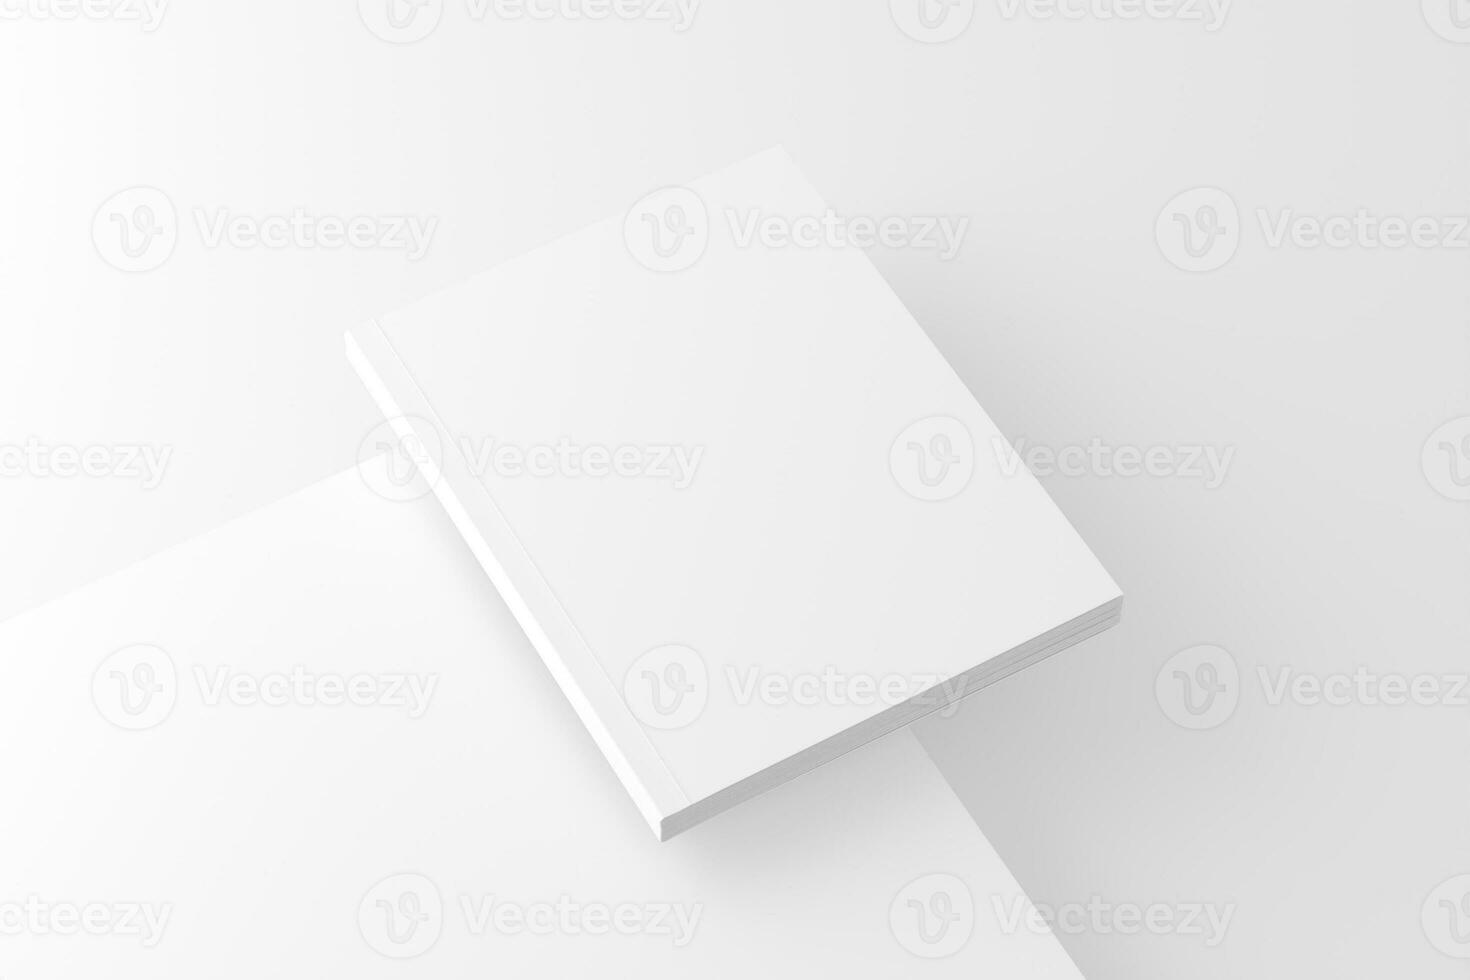 noi lettera copertina morbida libro copertina bianca vuoto modello foto